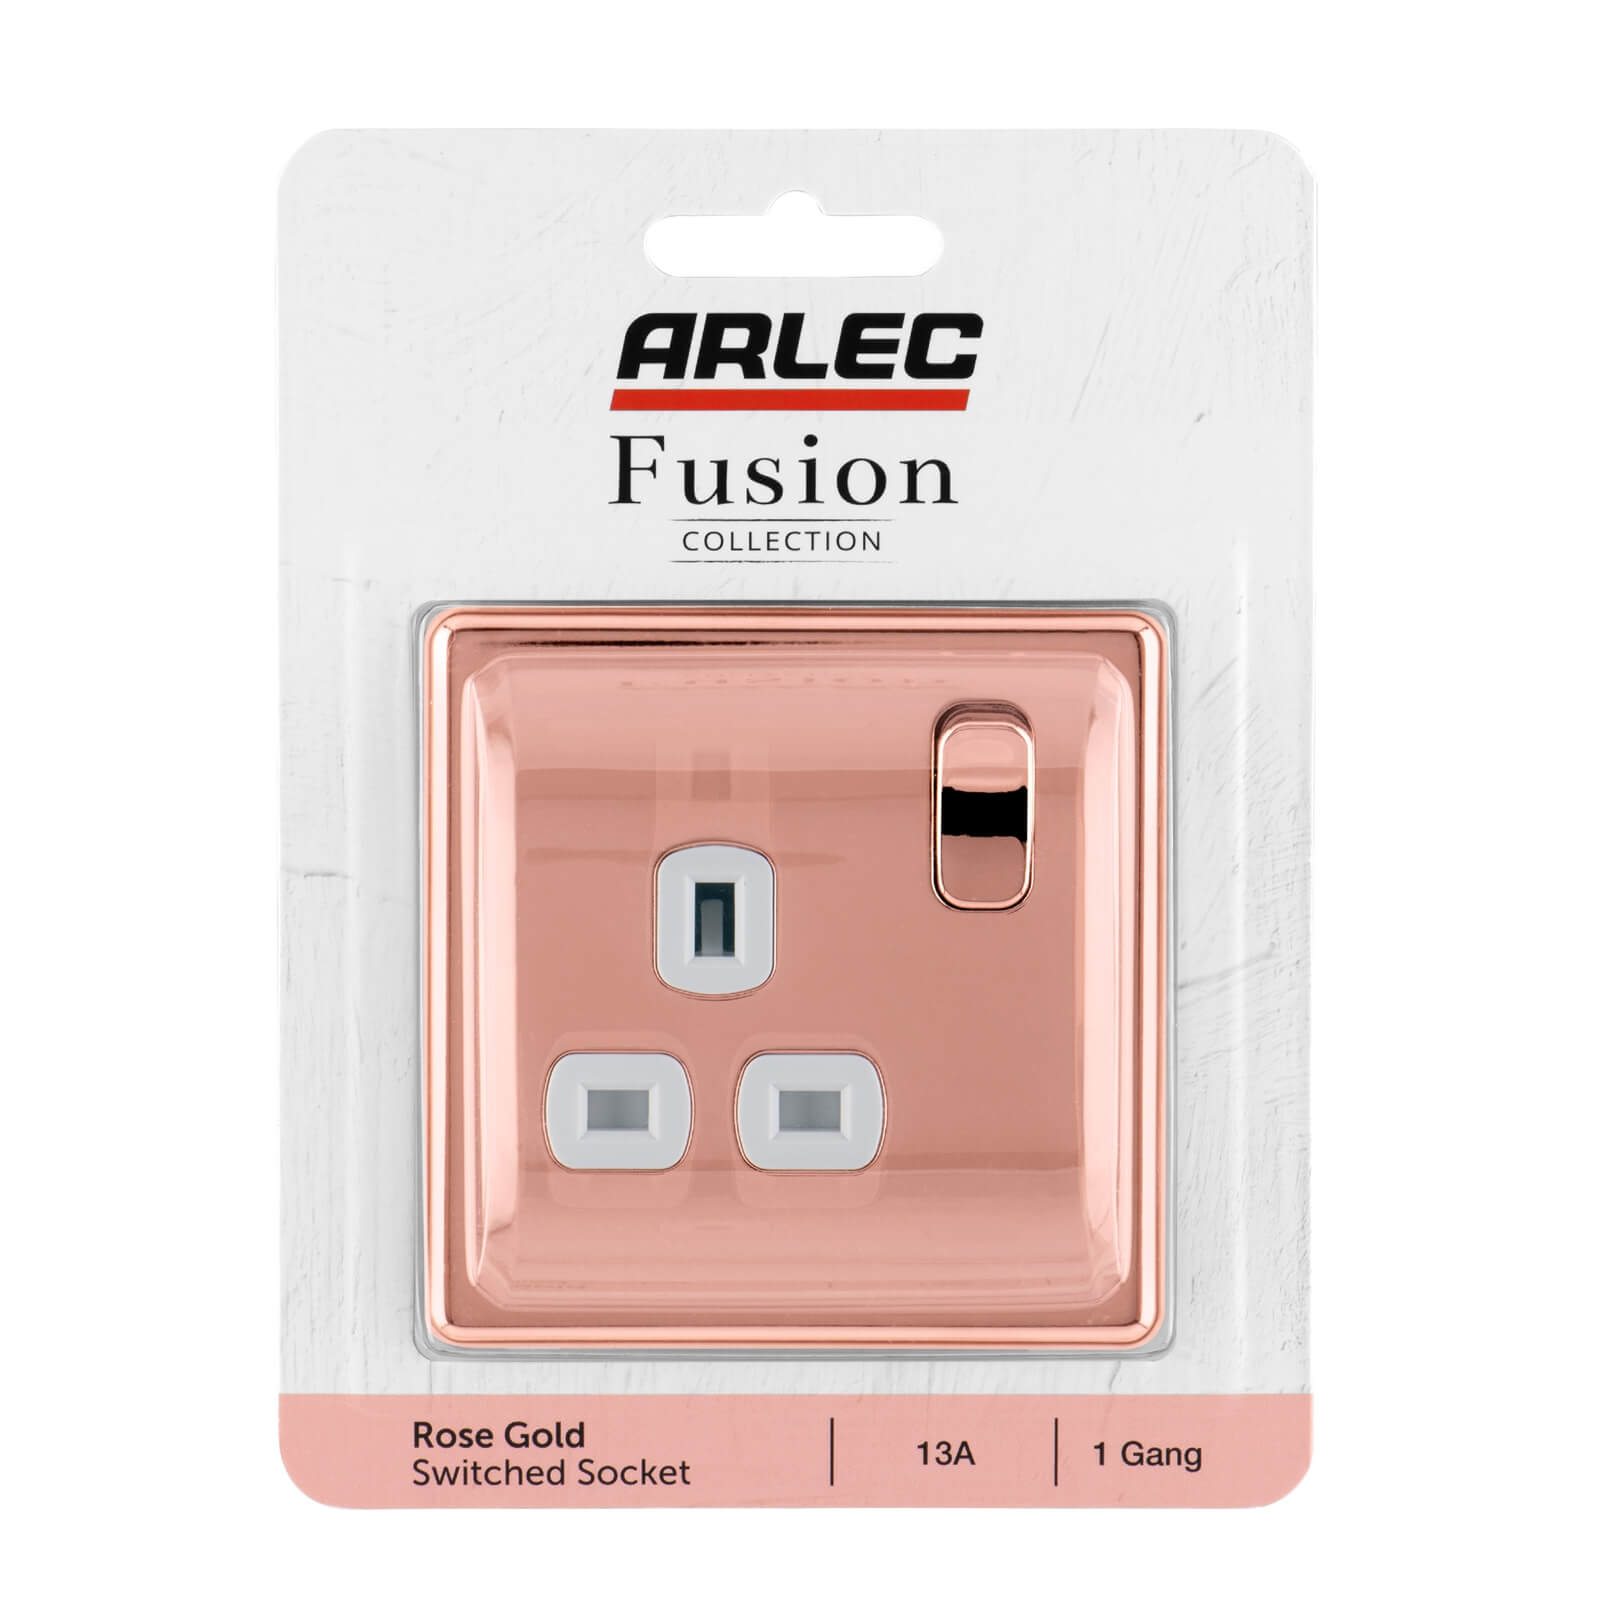 Arlec Fusion 13A 1 Gang Rose Gold Single switched socket